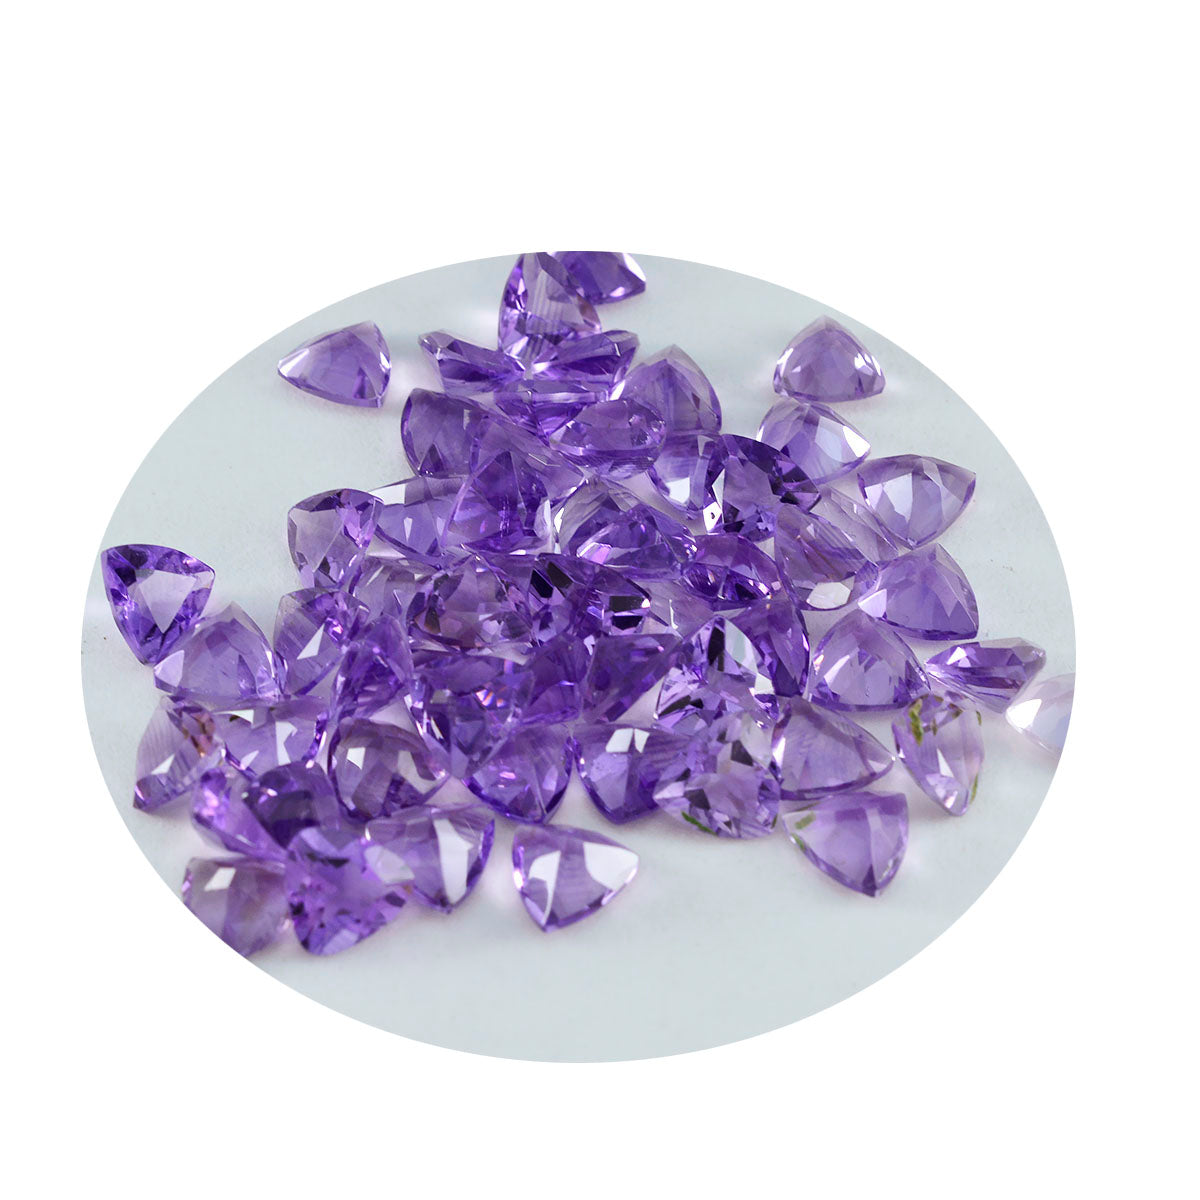 Riyogems 1PC Real Purple Amethyst Faceted 6x6 mm Trillion Shape handsome Quality Gemstone